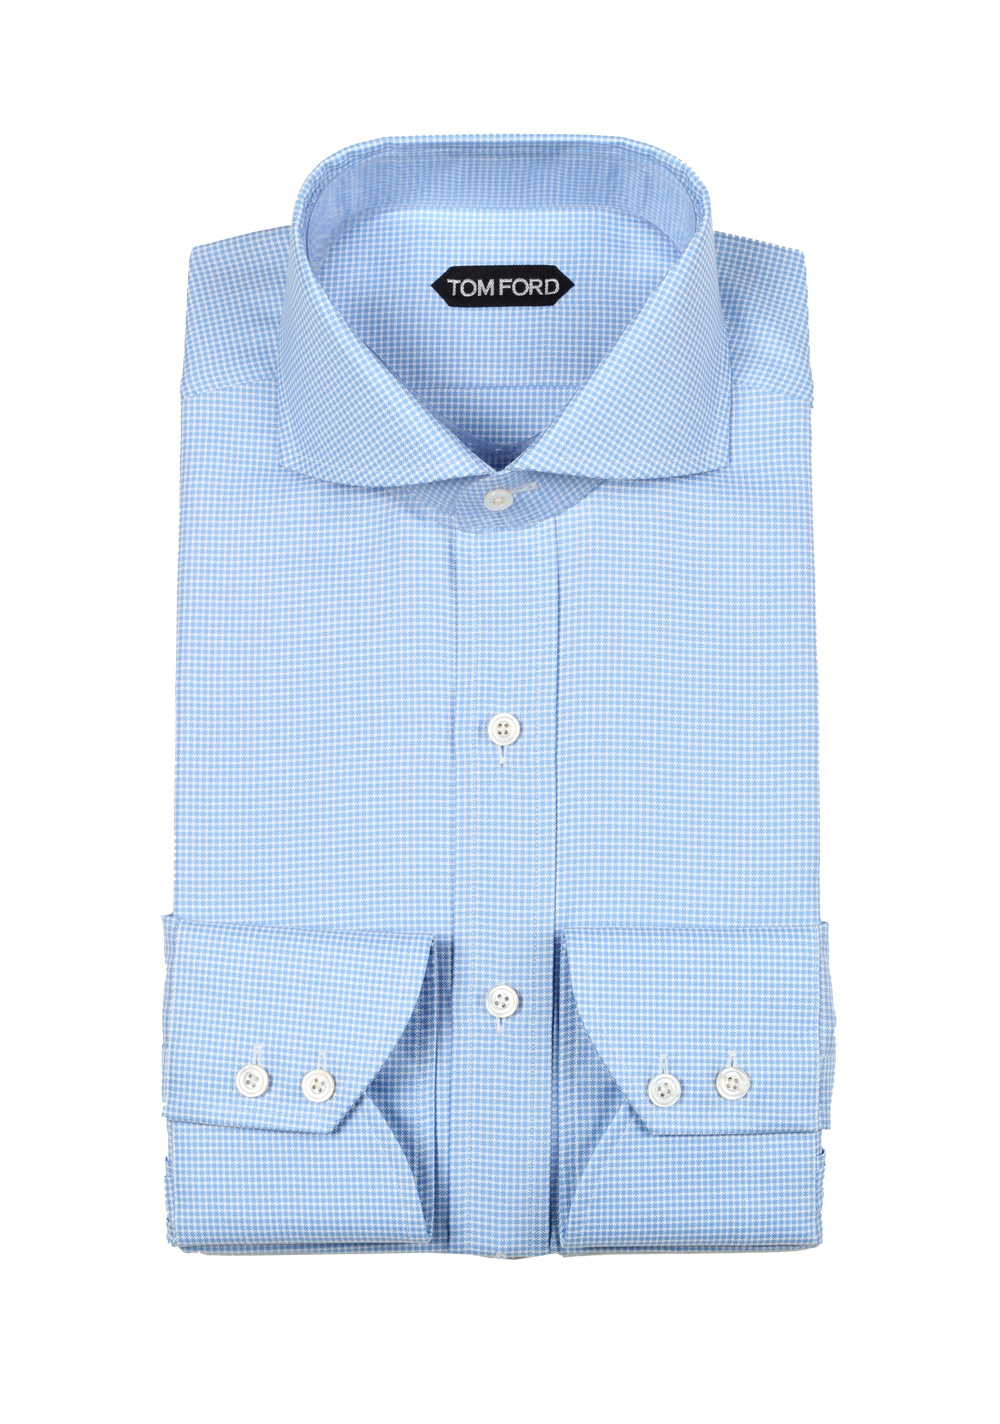 TOM FORD Checked White Blue Shirt Size 42 / 16,5 U.S. | Costume Limité